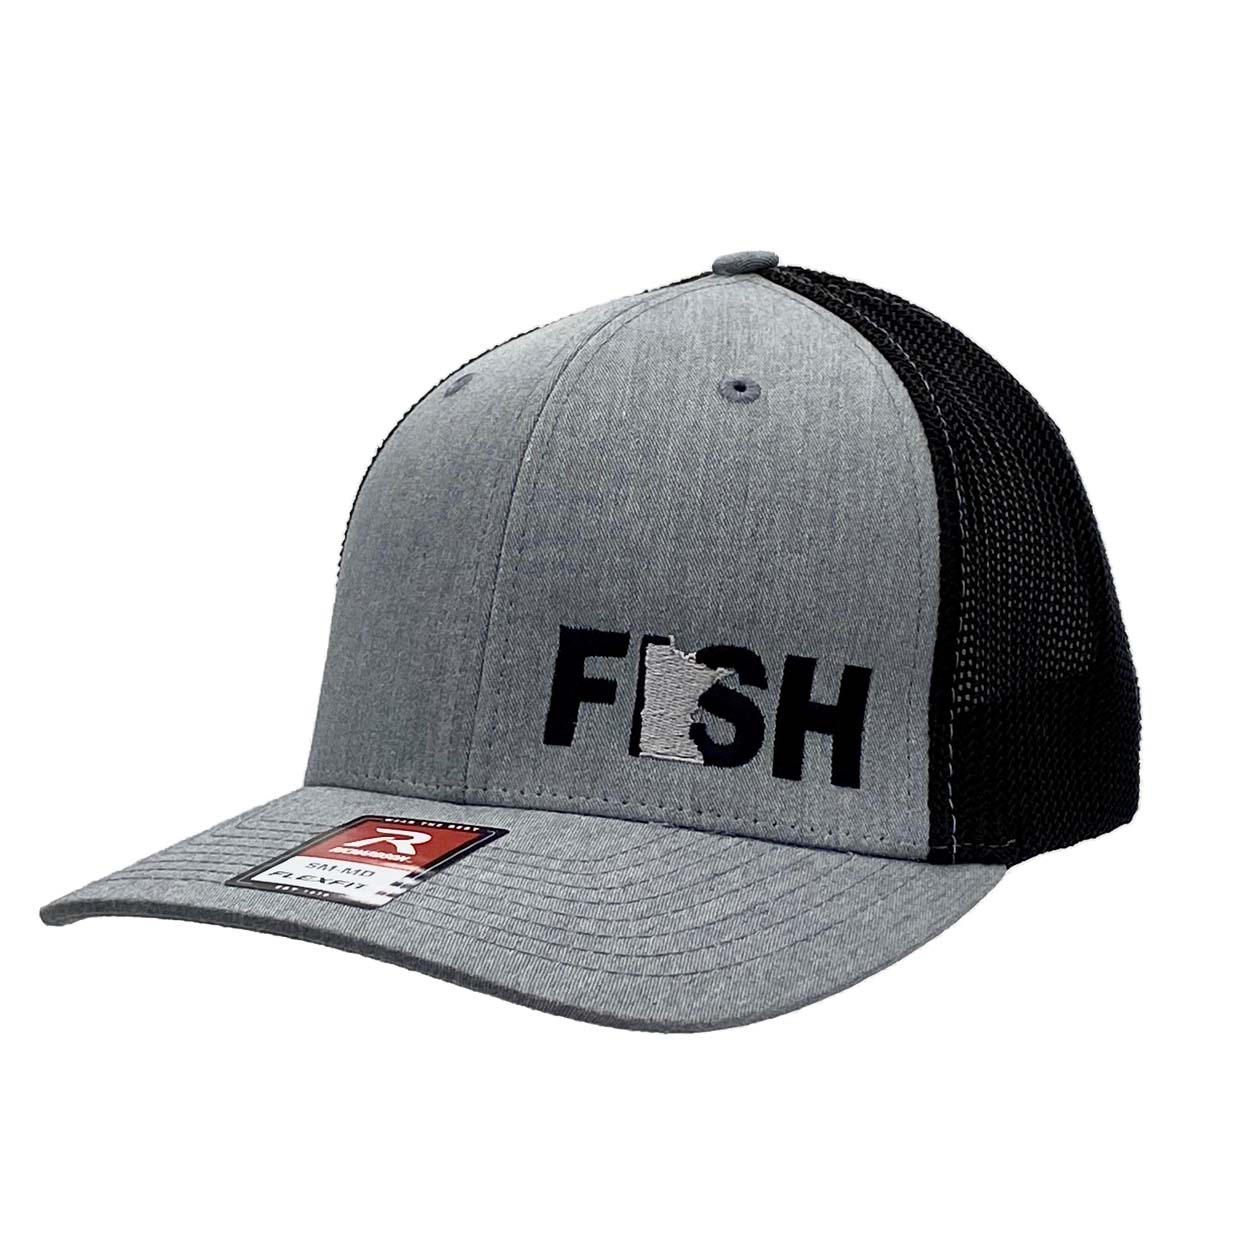 Fish Minnesota Night Out Embroidered Richardson Flex Fit Mesh Snapback Trucker Hat Heather Gray/Black